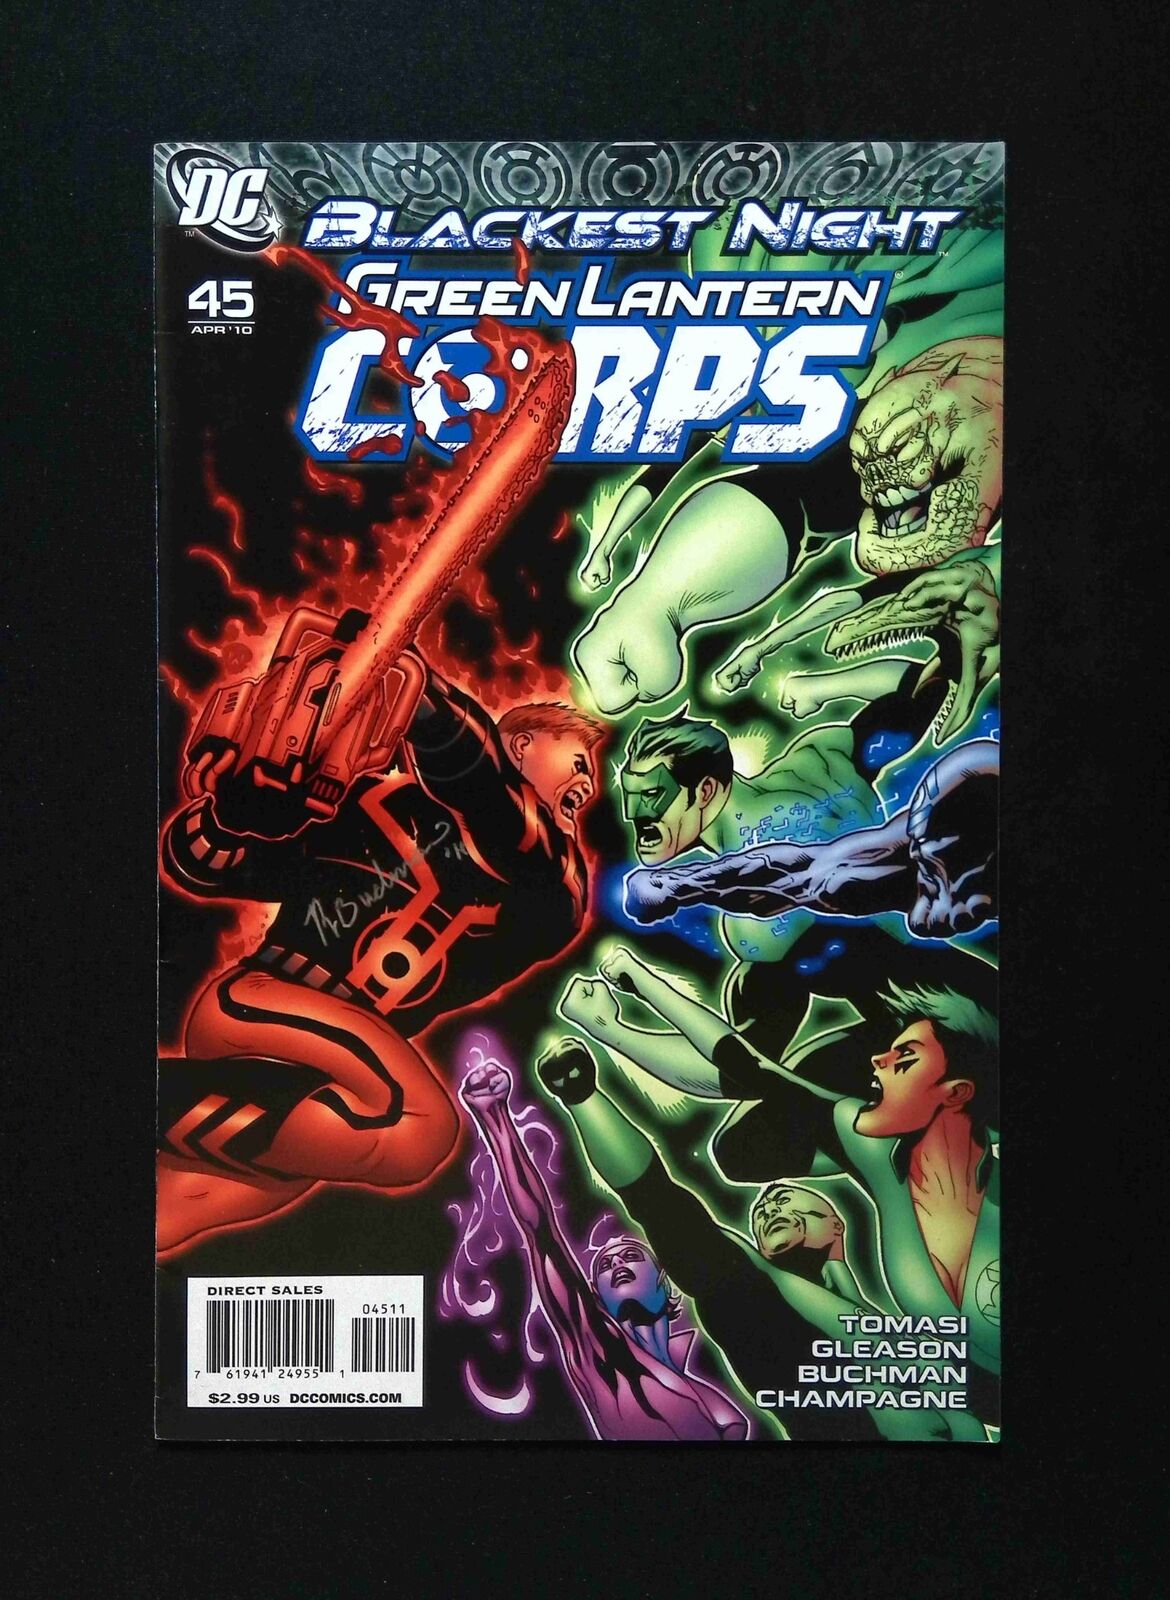 Green Lantern Corp #45  DC Comics 2010 VF+  Signed By REBECCA BUCHMAN